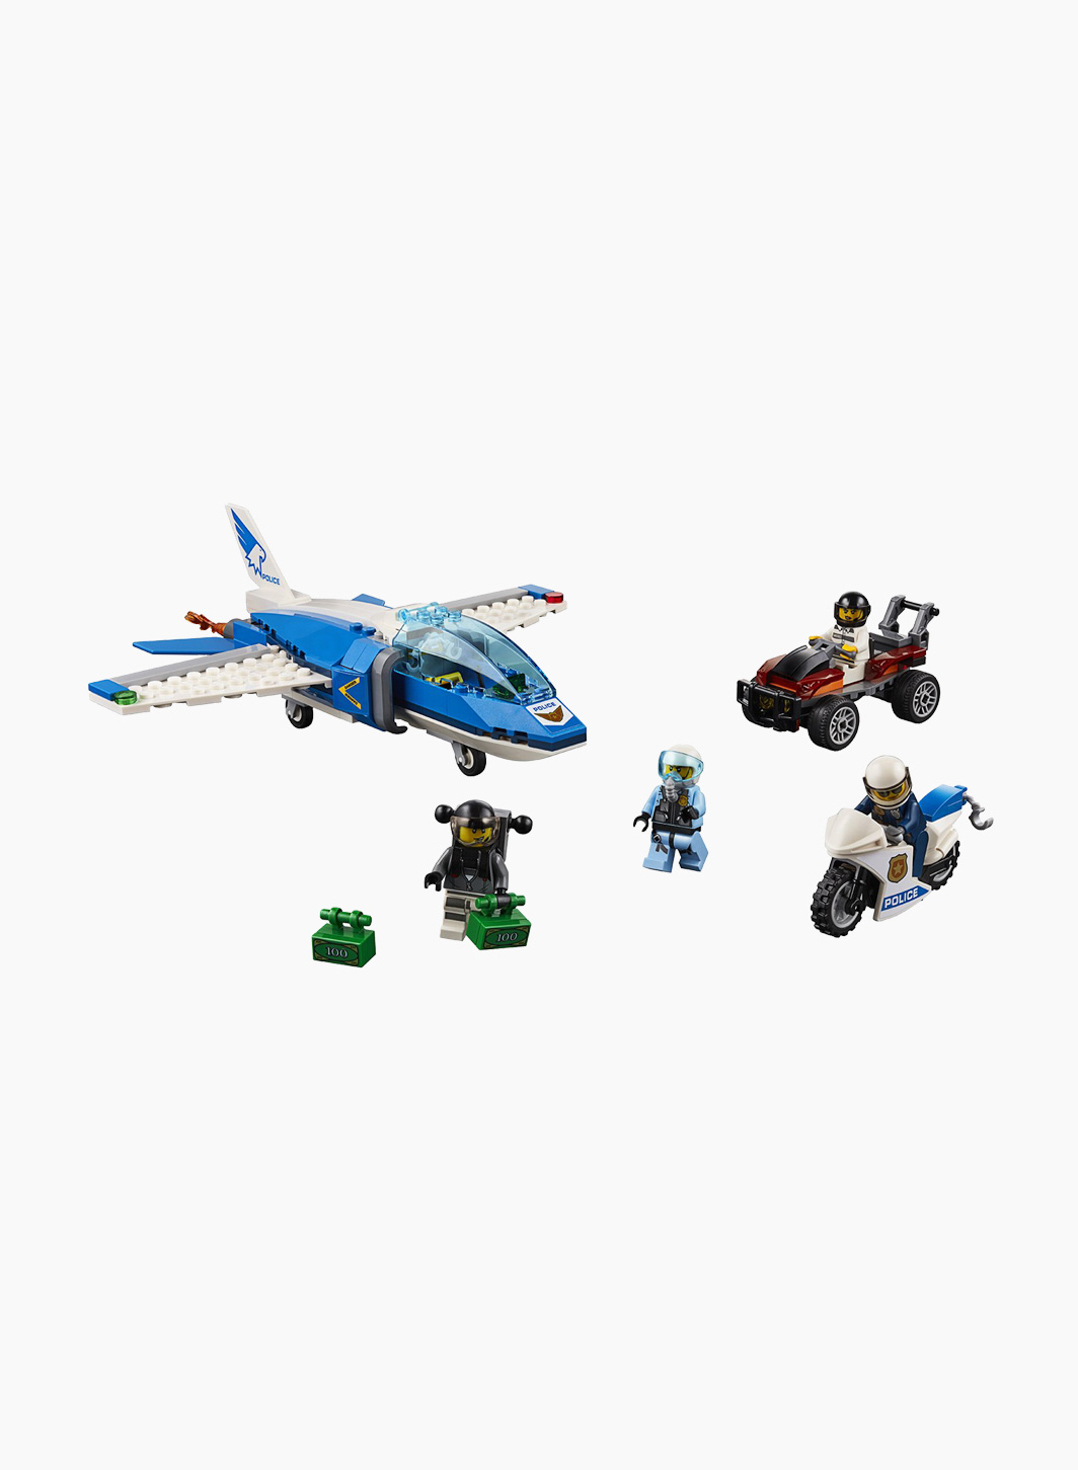 Lego City Constructor Sky Police Parachute Arrest